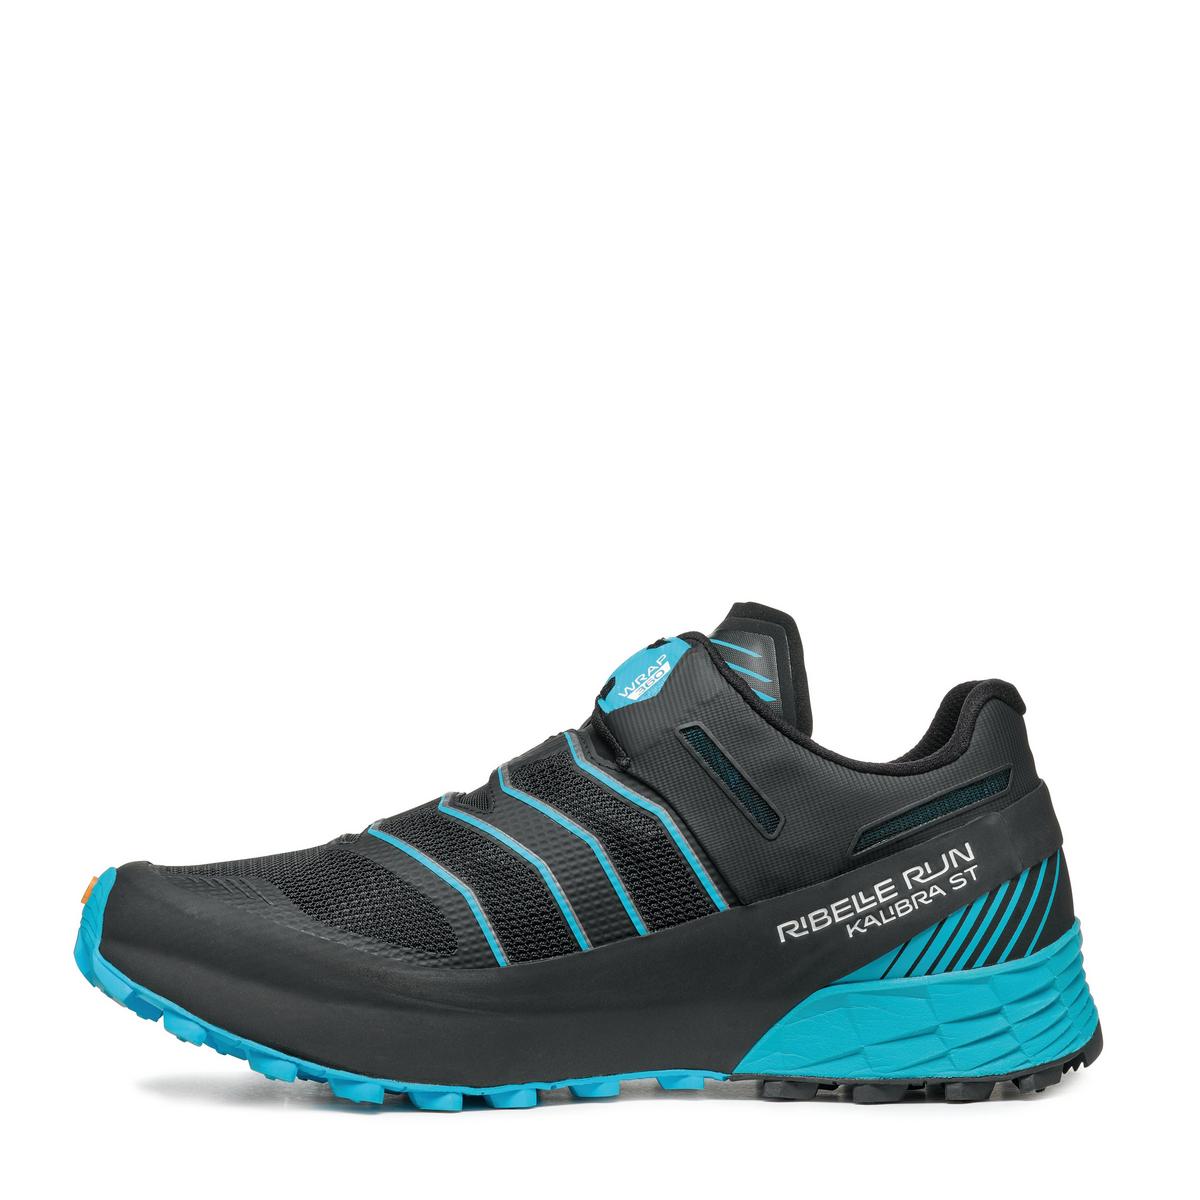 Scarpa Men's Ribelle Run Kalibra ST (Soft Terrain) Trail Running Shoes - Black